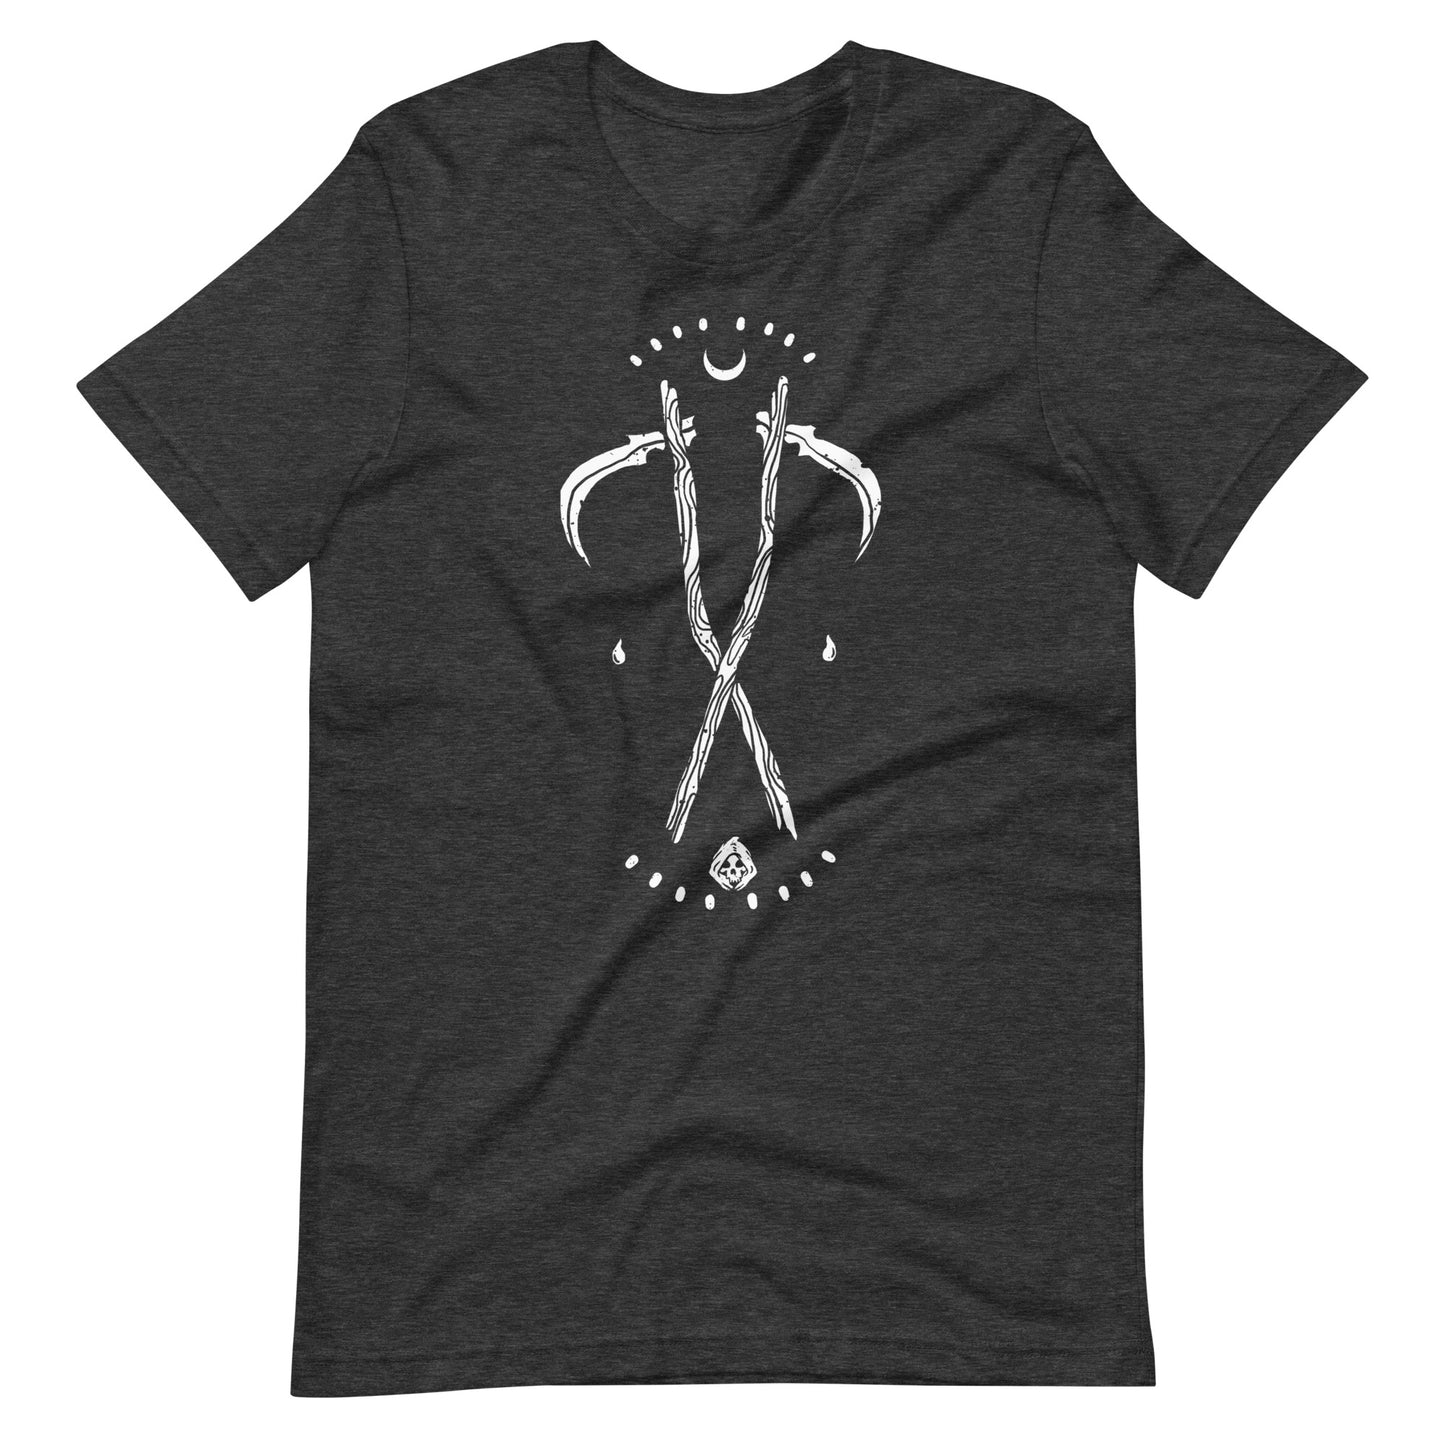 Grim - Men's t-shirt - Dark Grey Heather Front